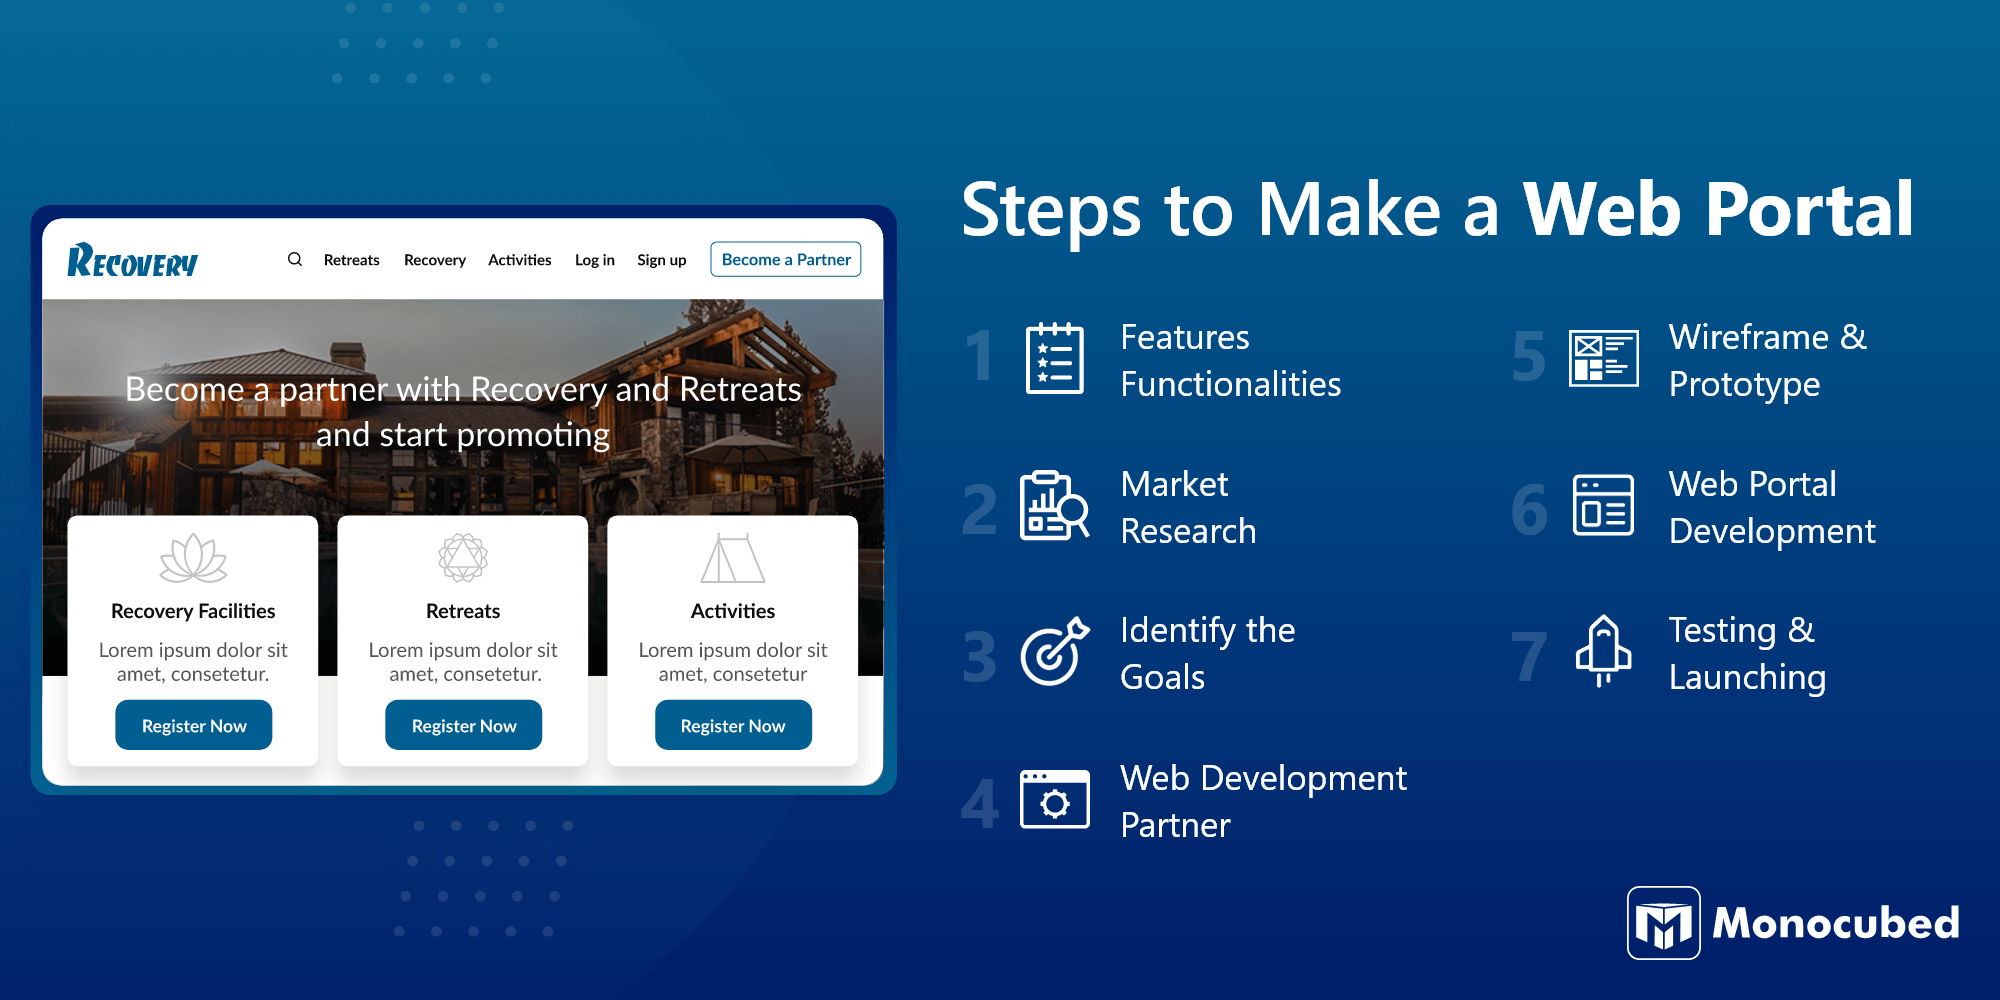 How to create a web portal?